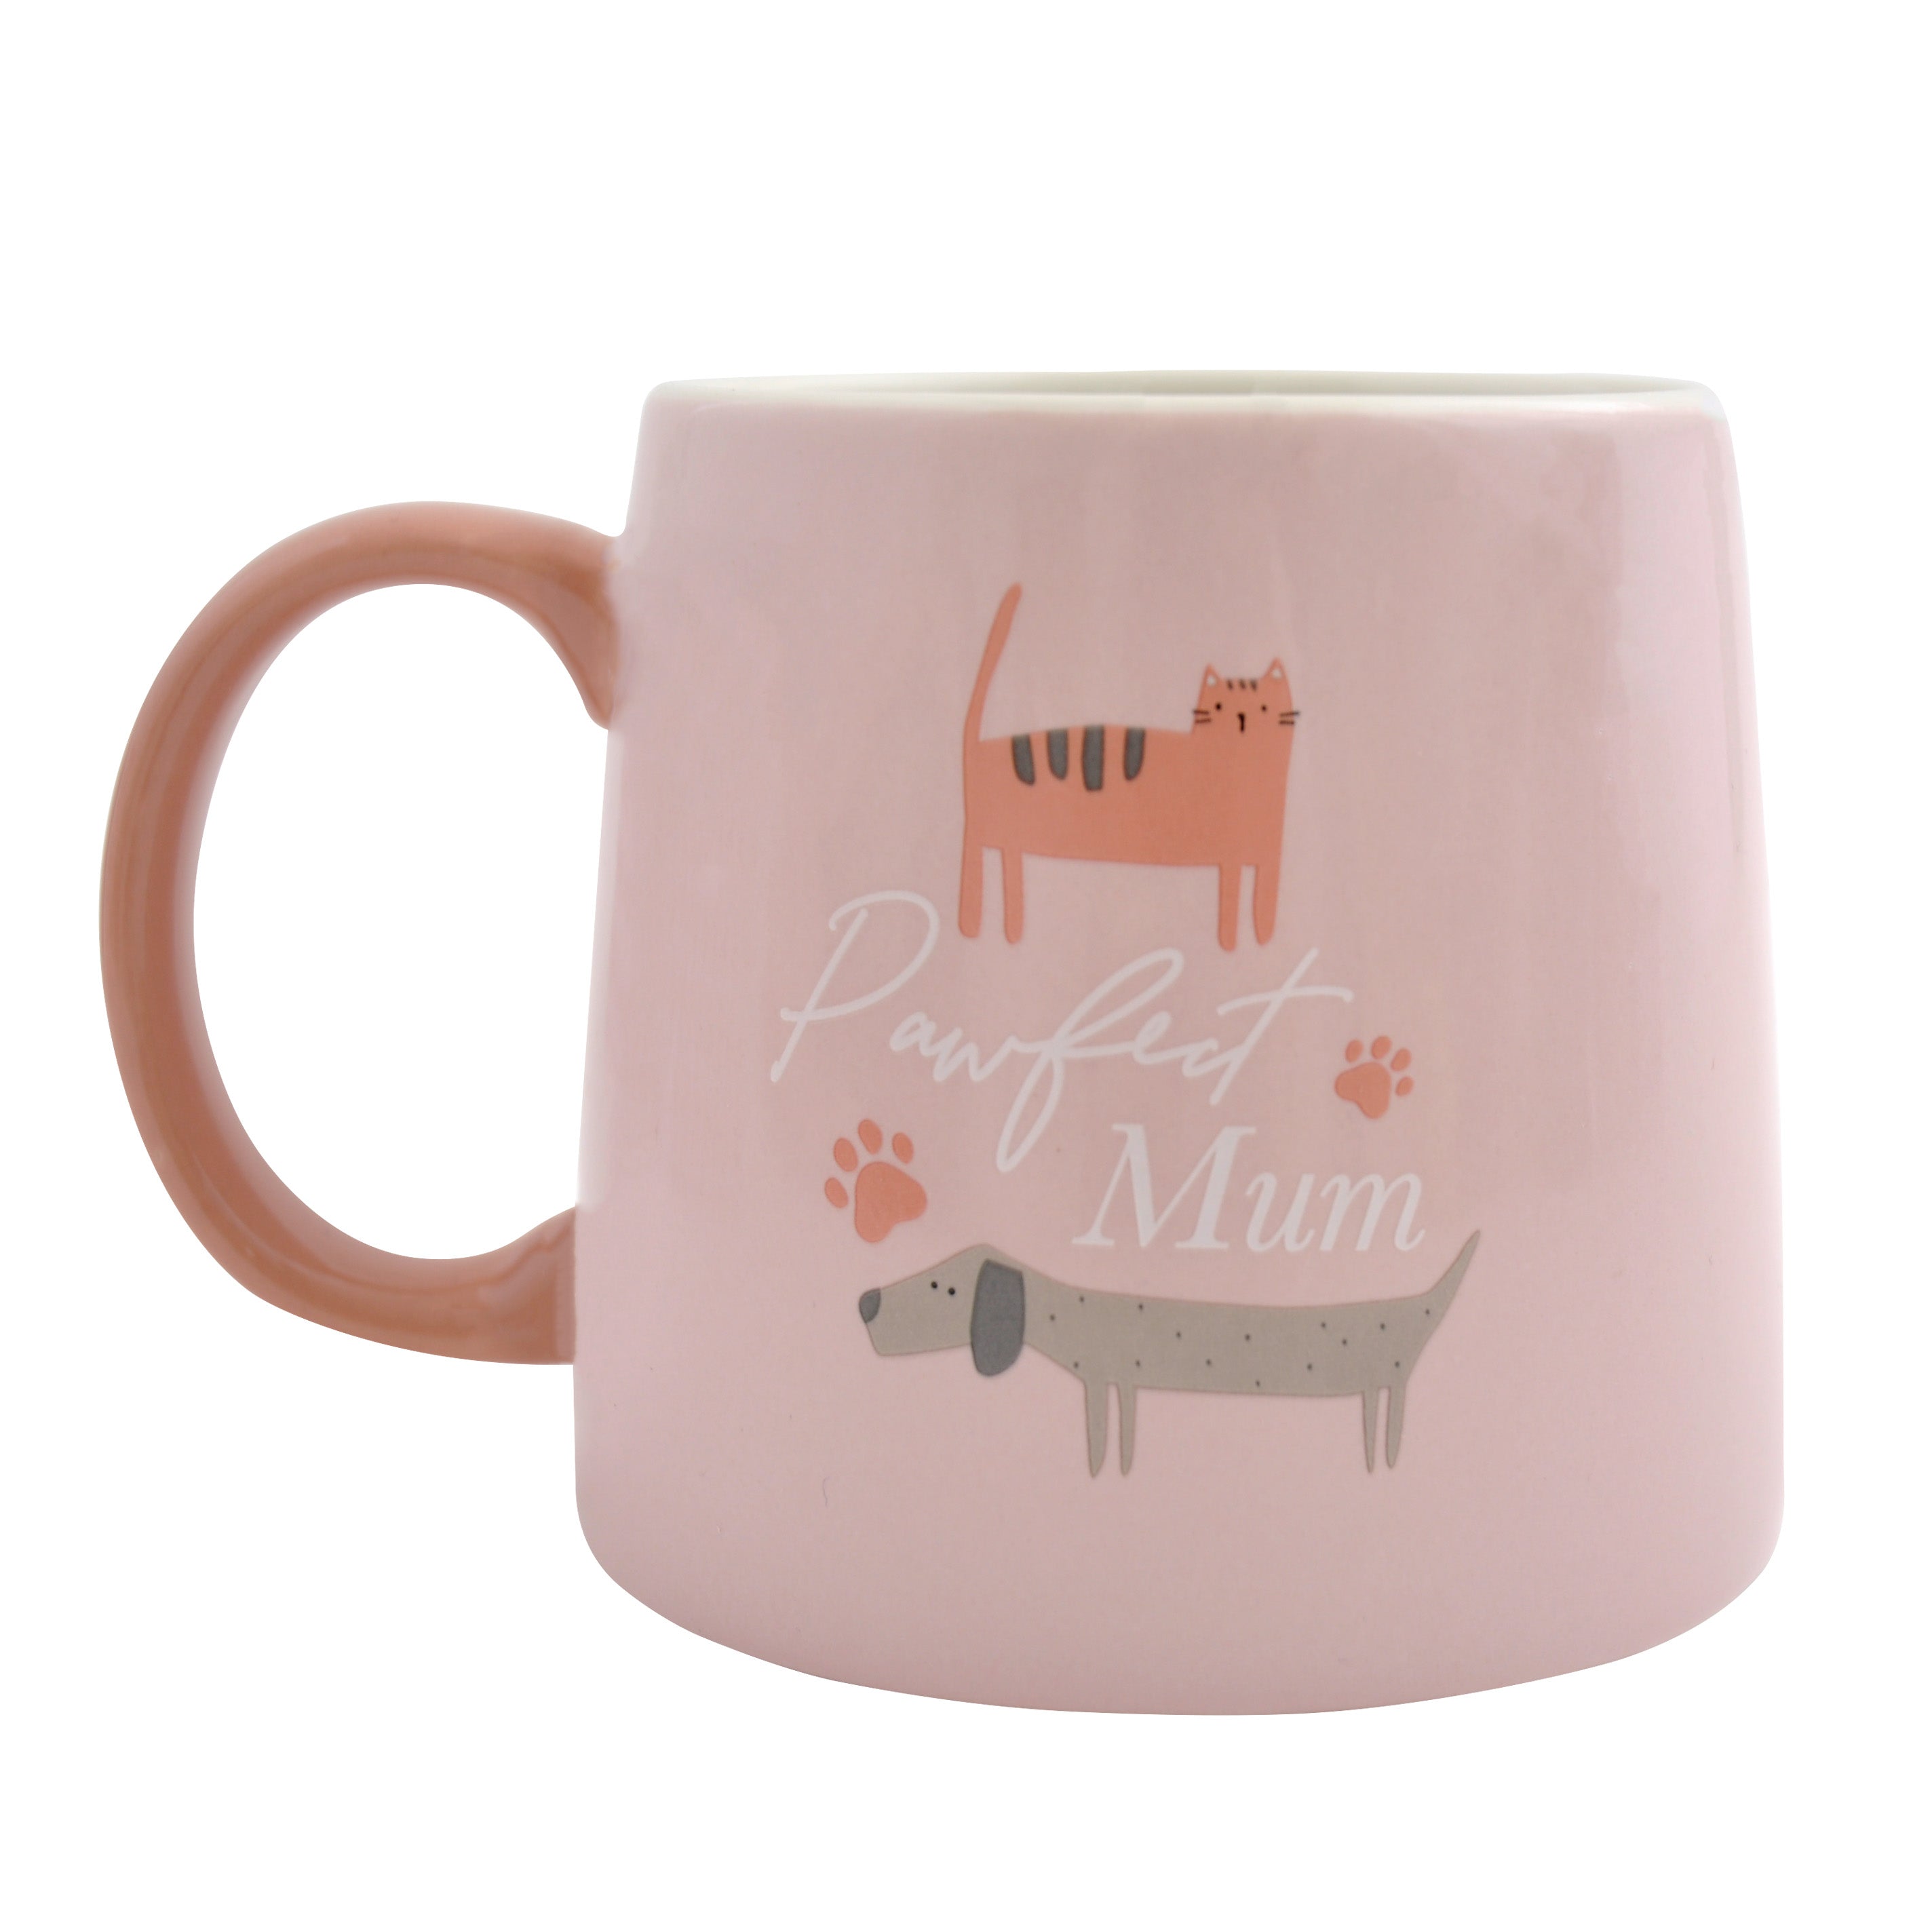 Ceramic Mug - Pawfect Mum